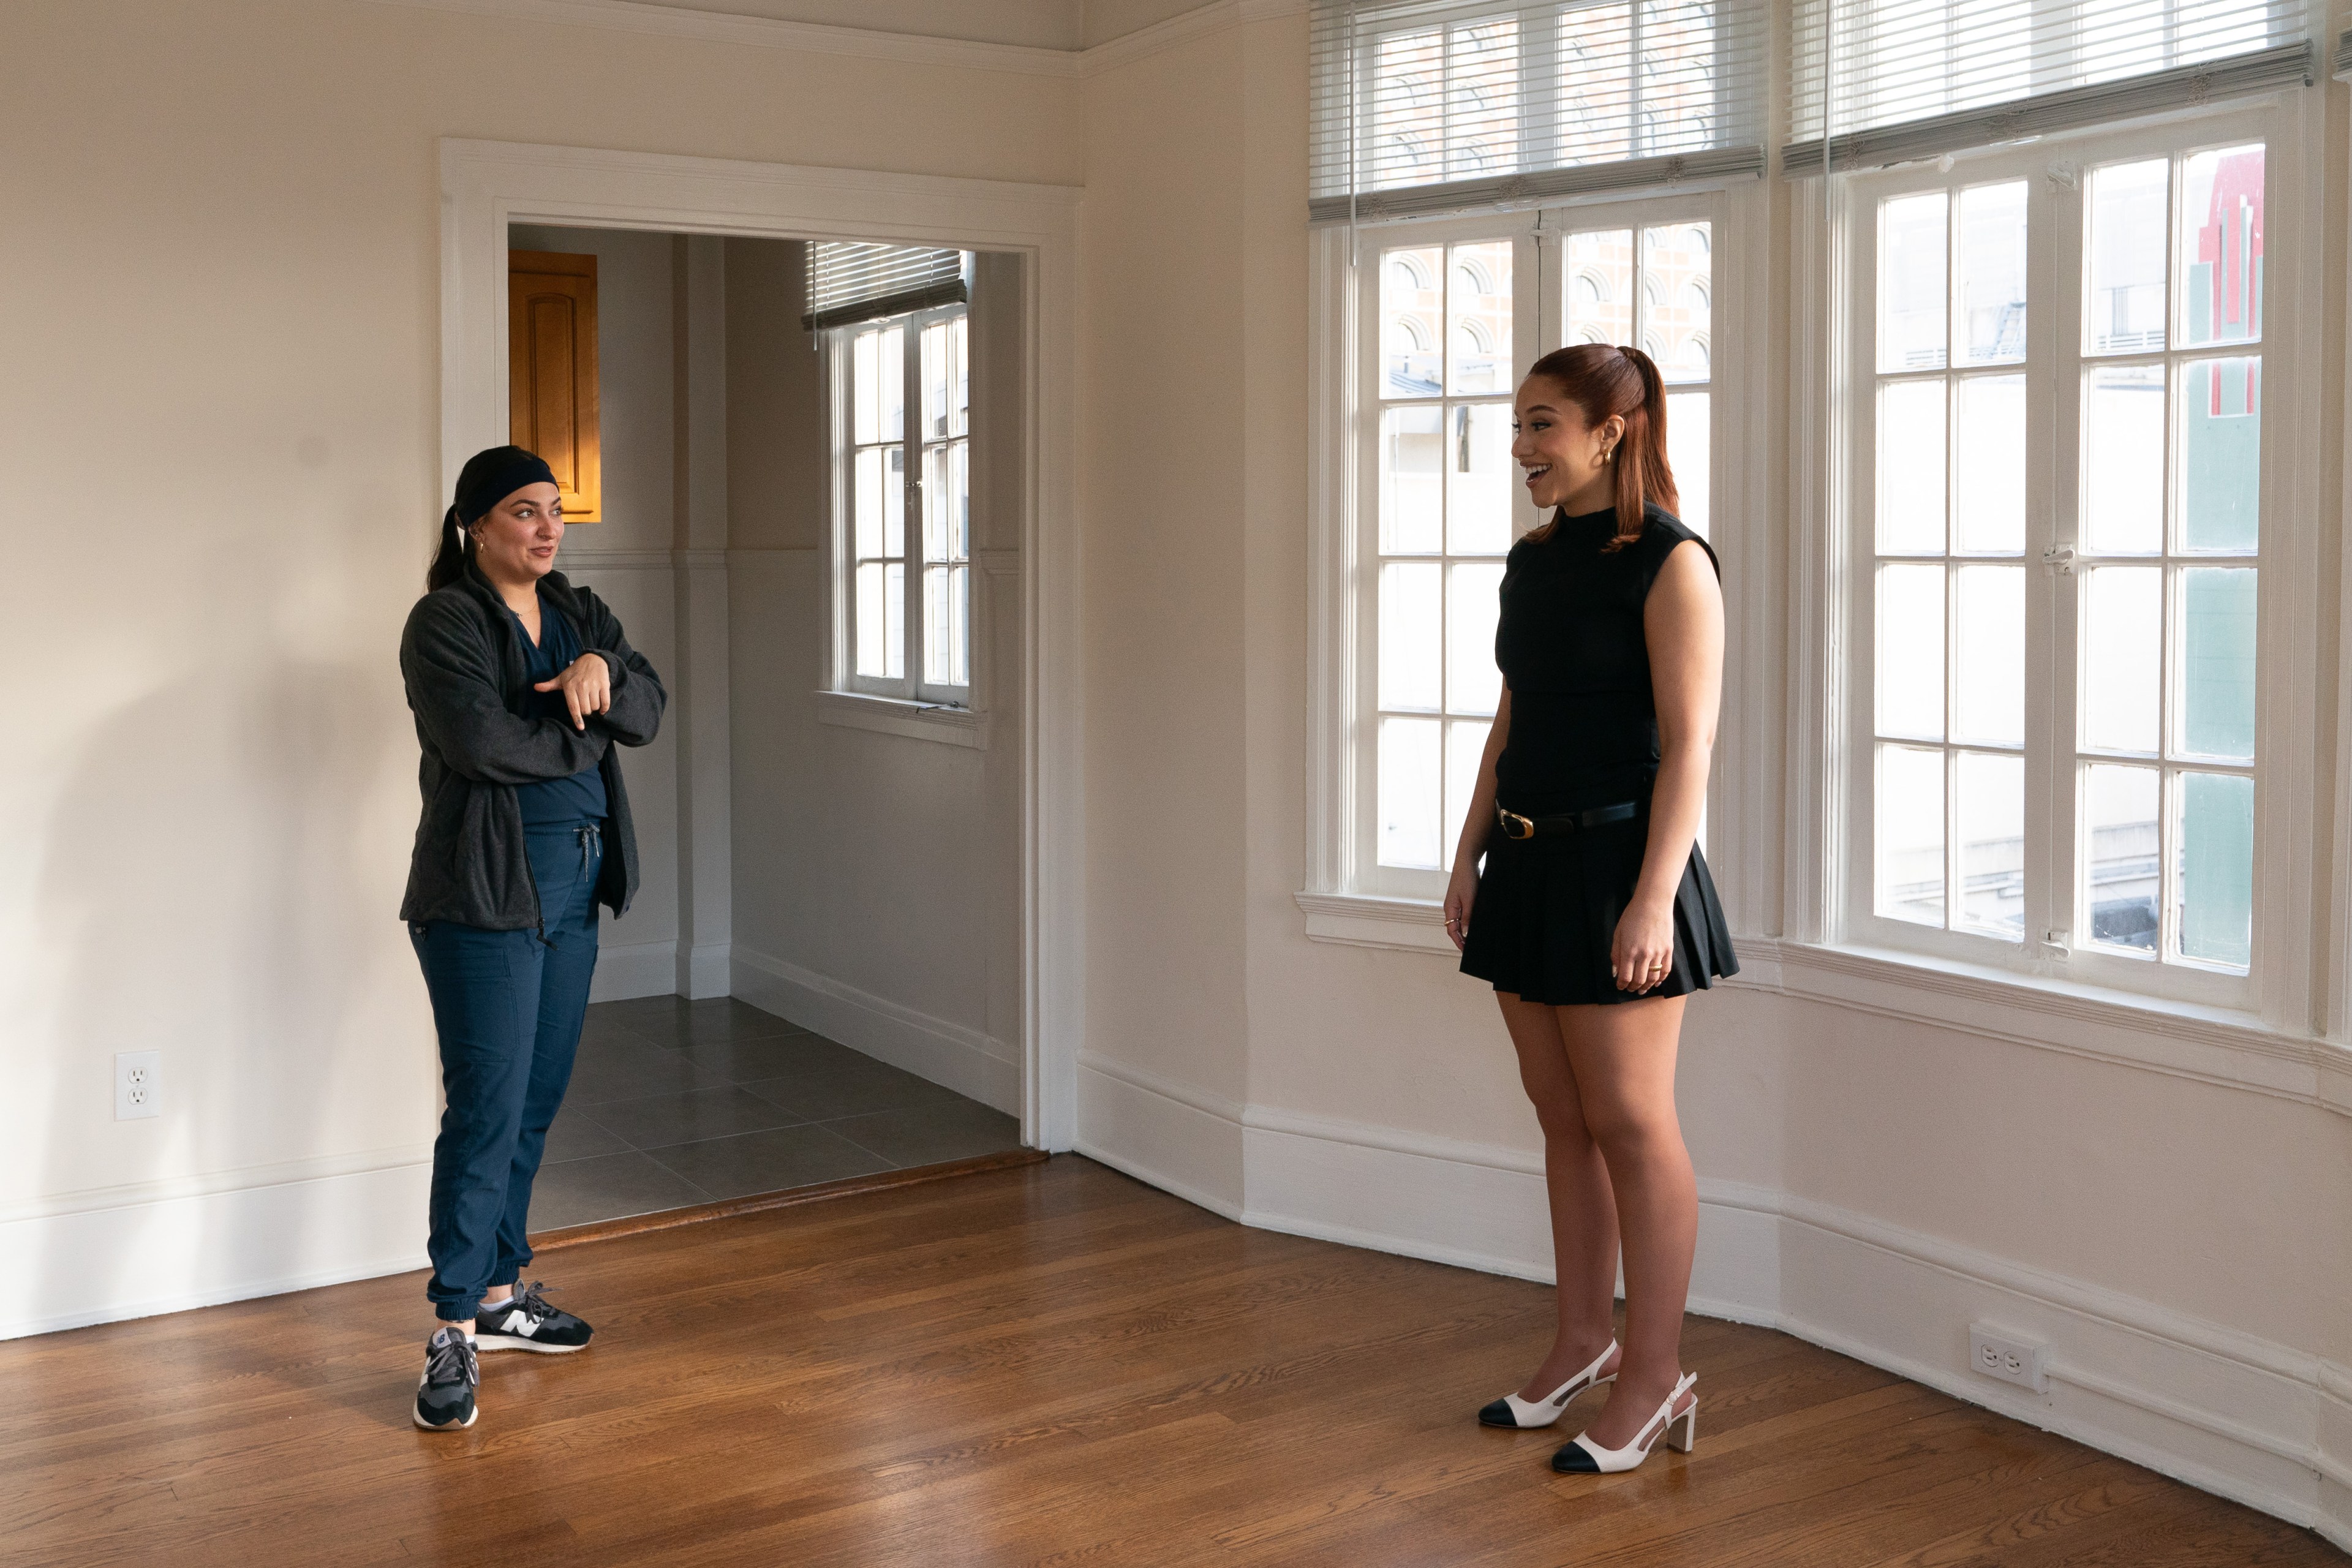 two women speak in an apartment